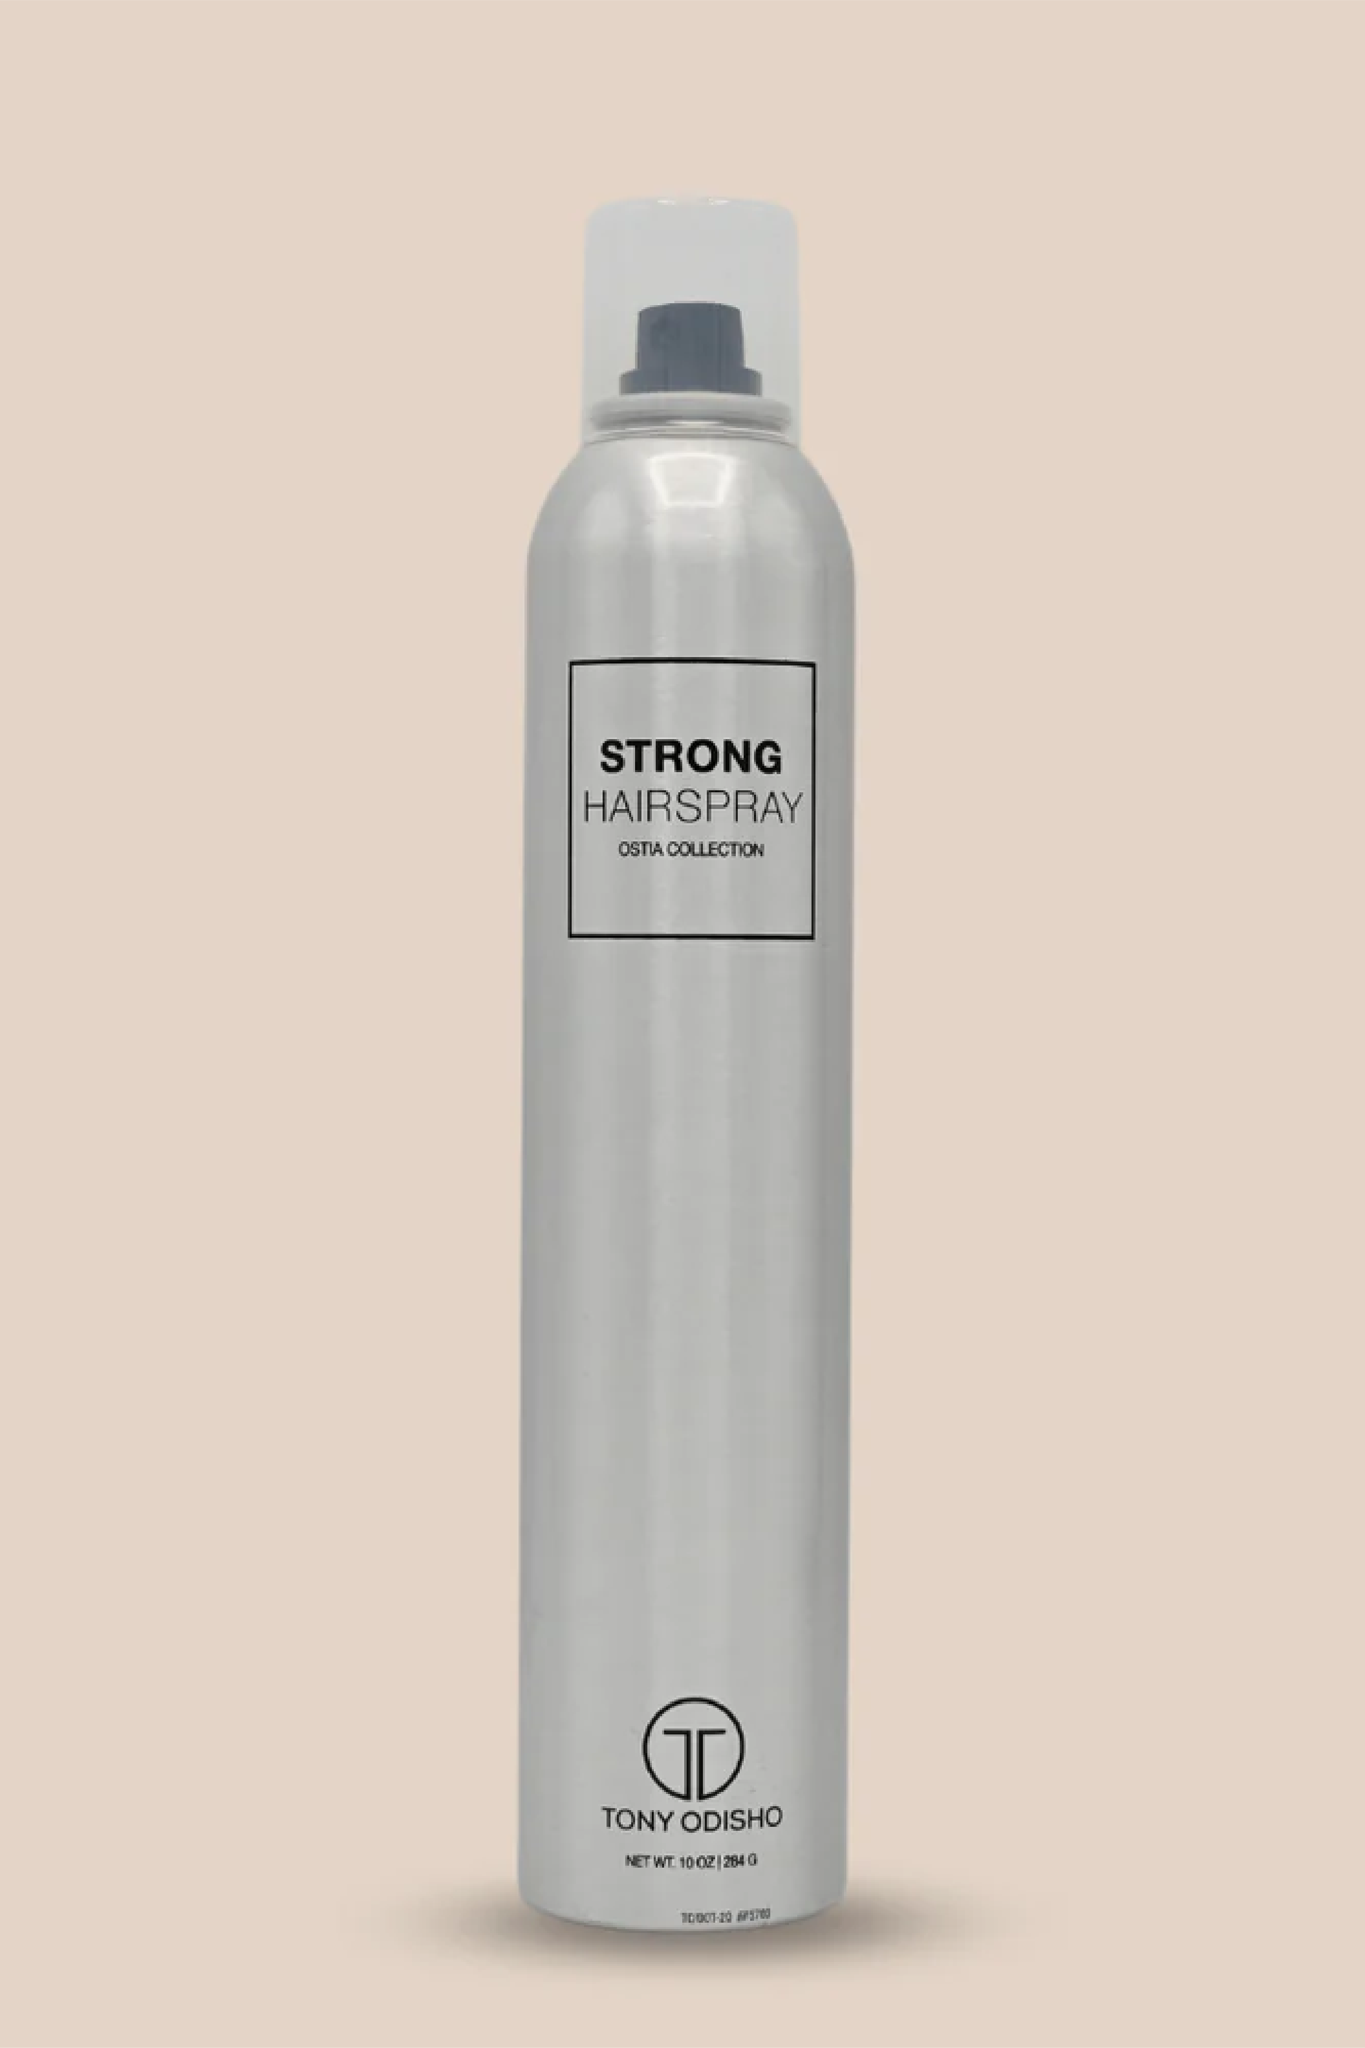 Strong Hairspray - Image 1